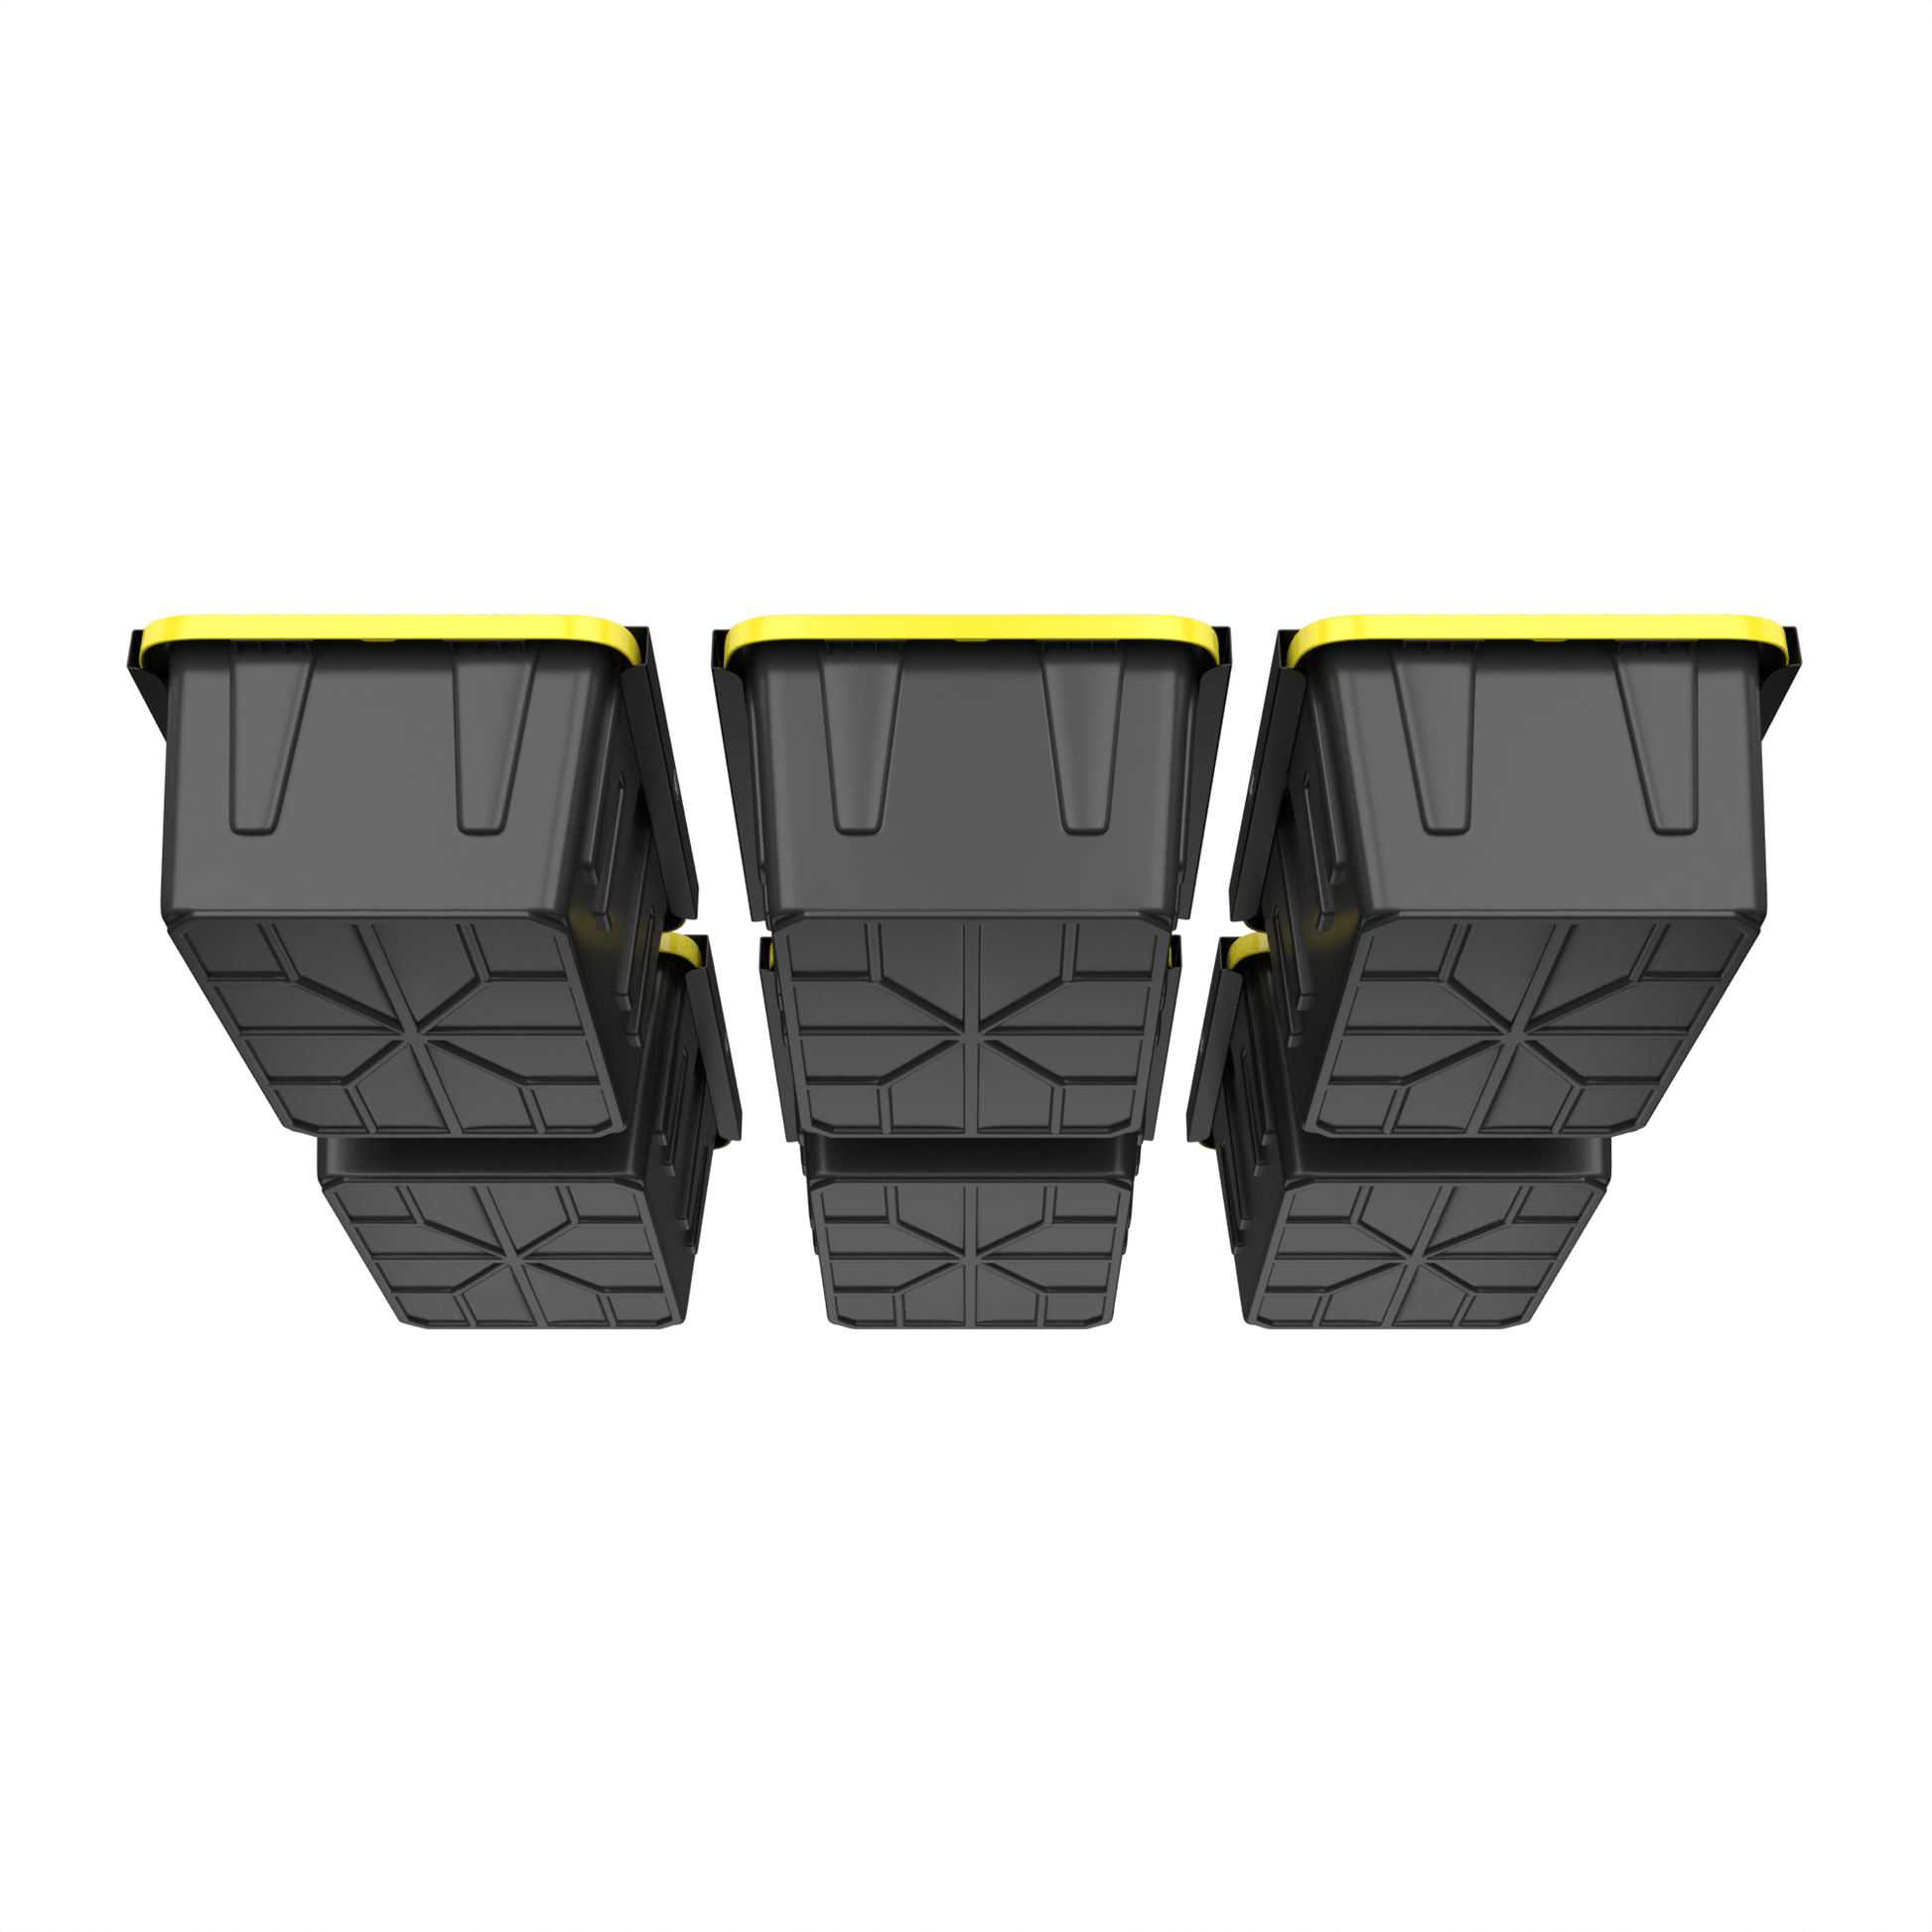 Koova Wall Mount Garage Tote Rack Storage System (3-Piece Set), Black